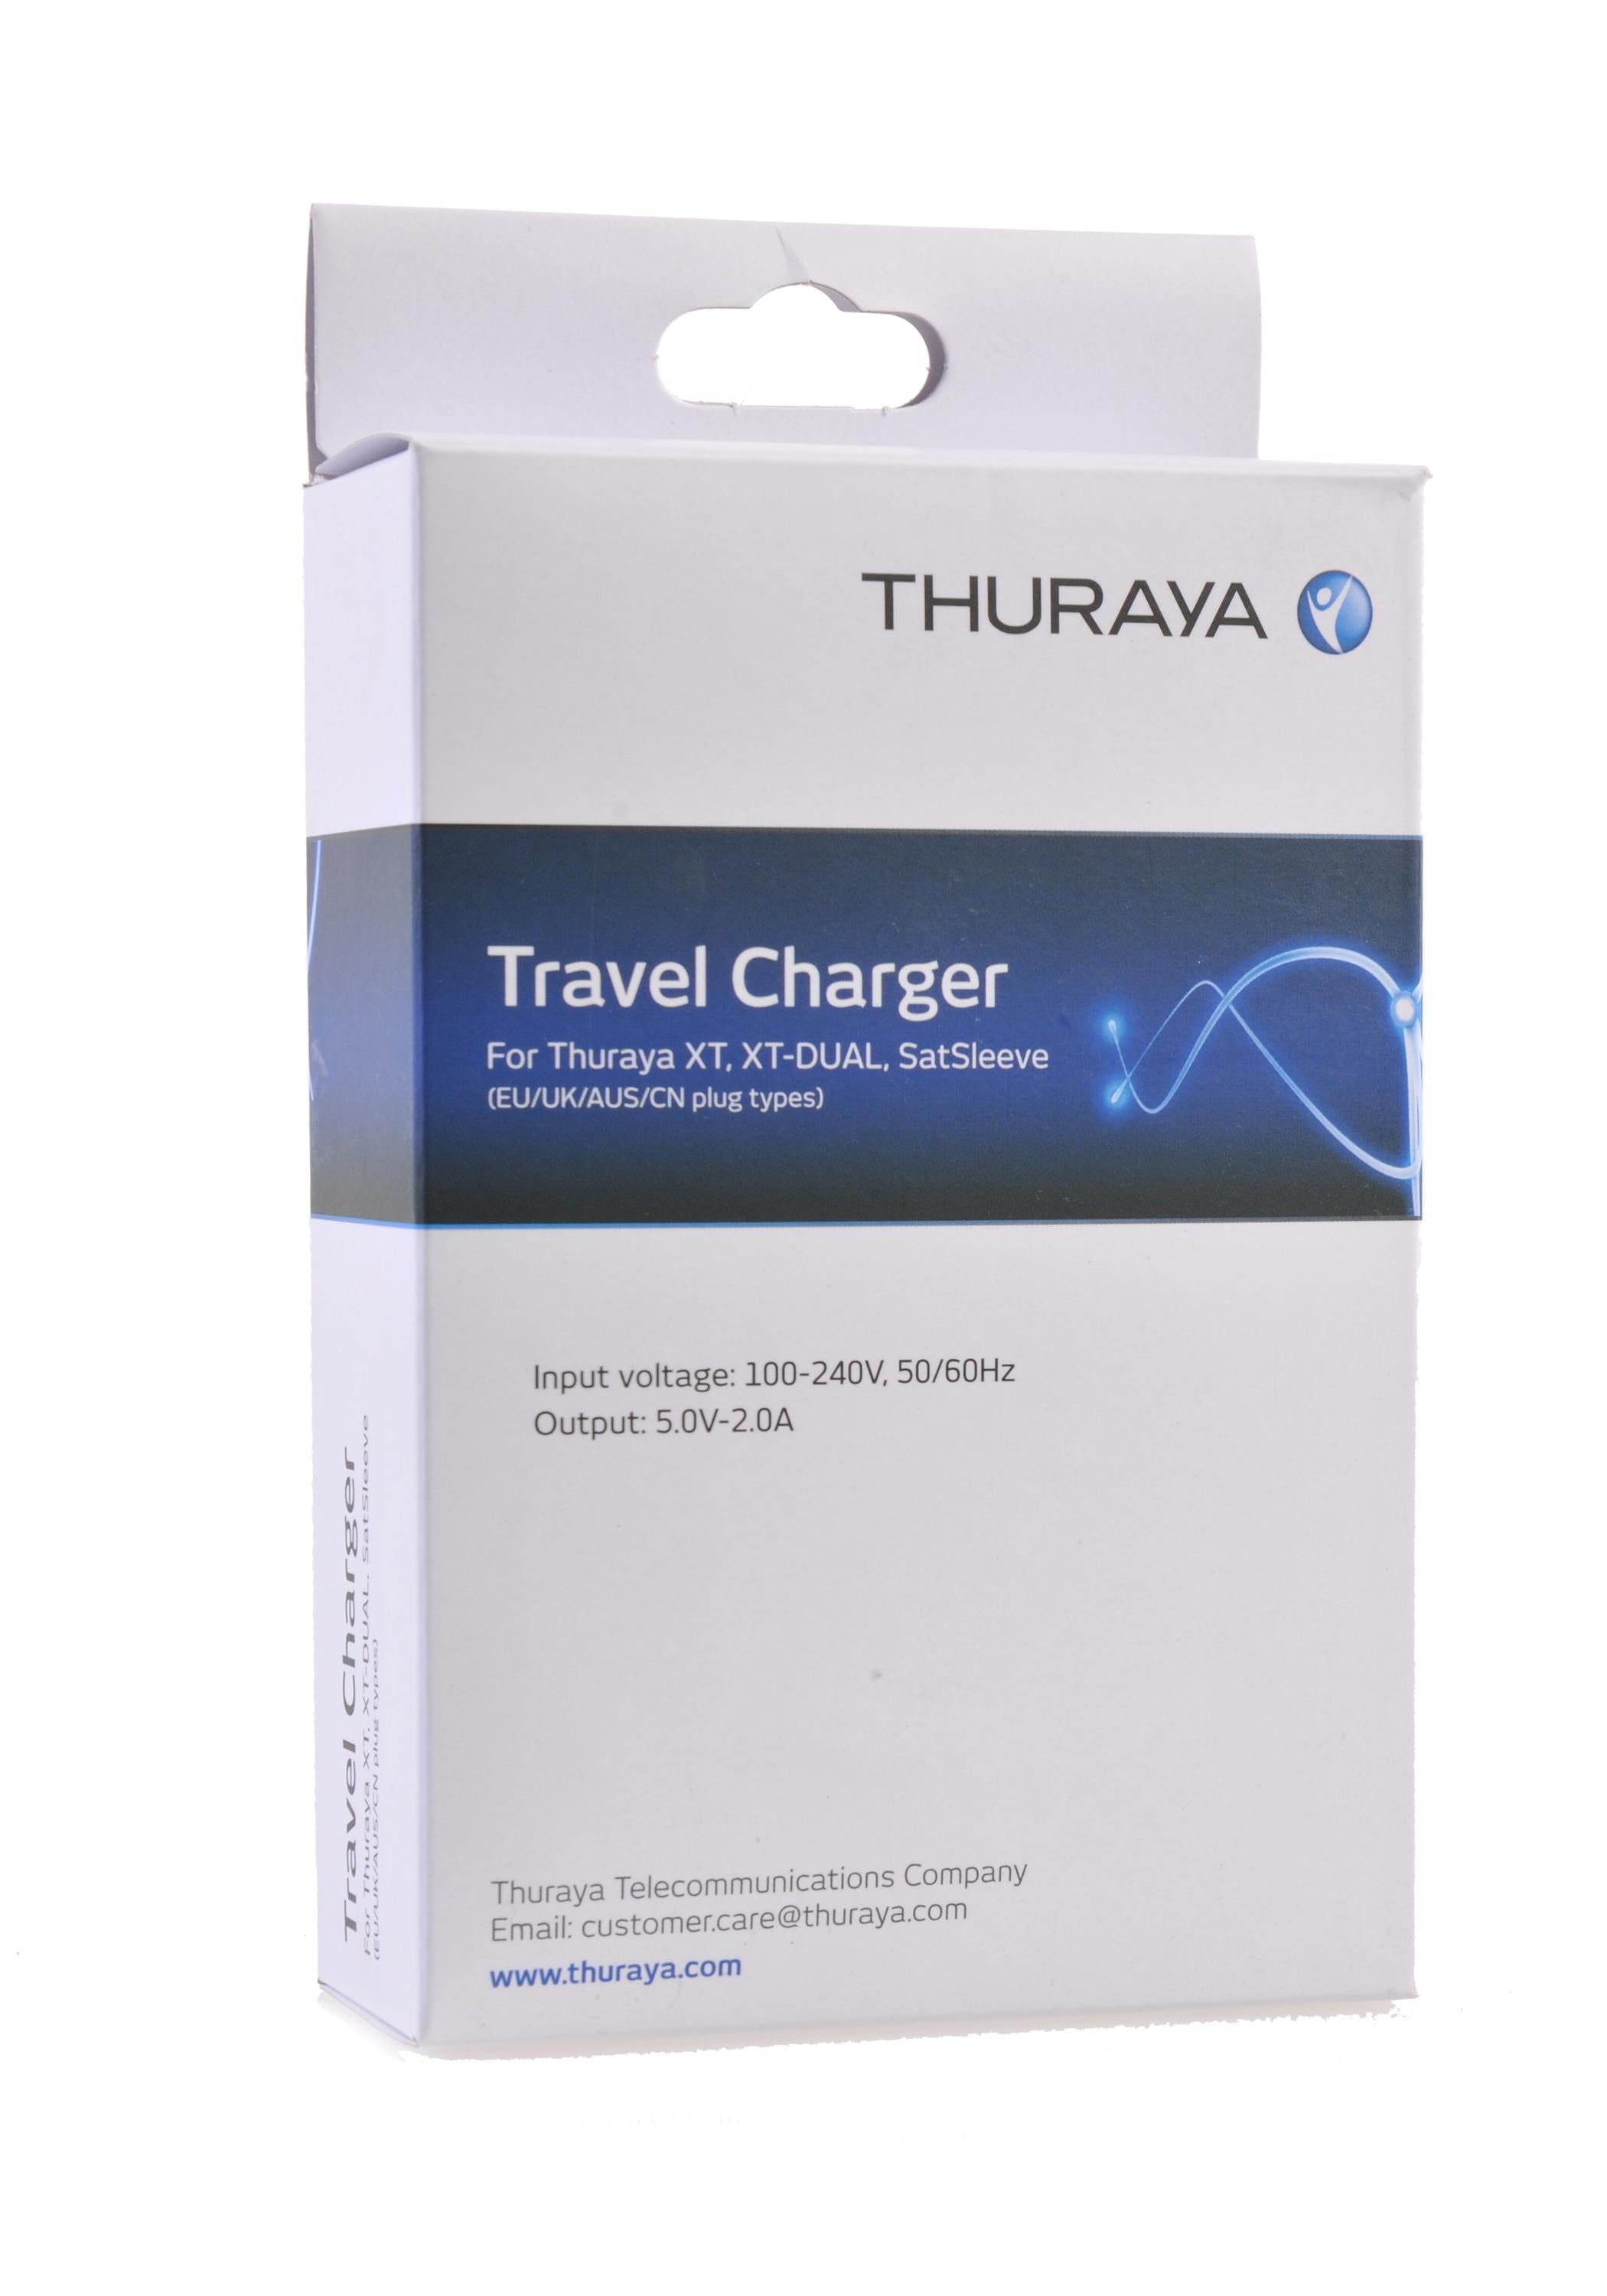 Thuraya Satellite Phone Travel Charger